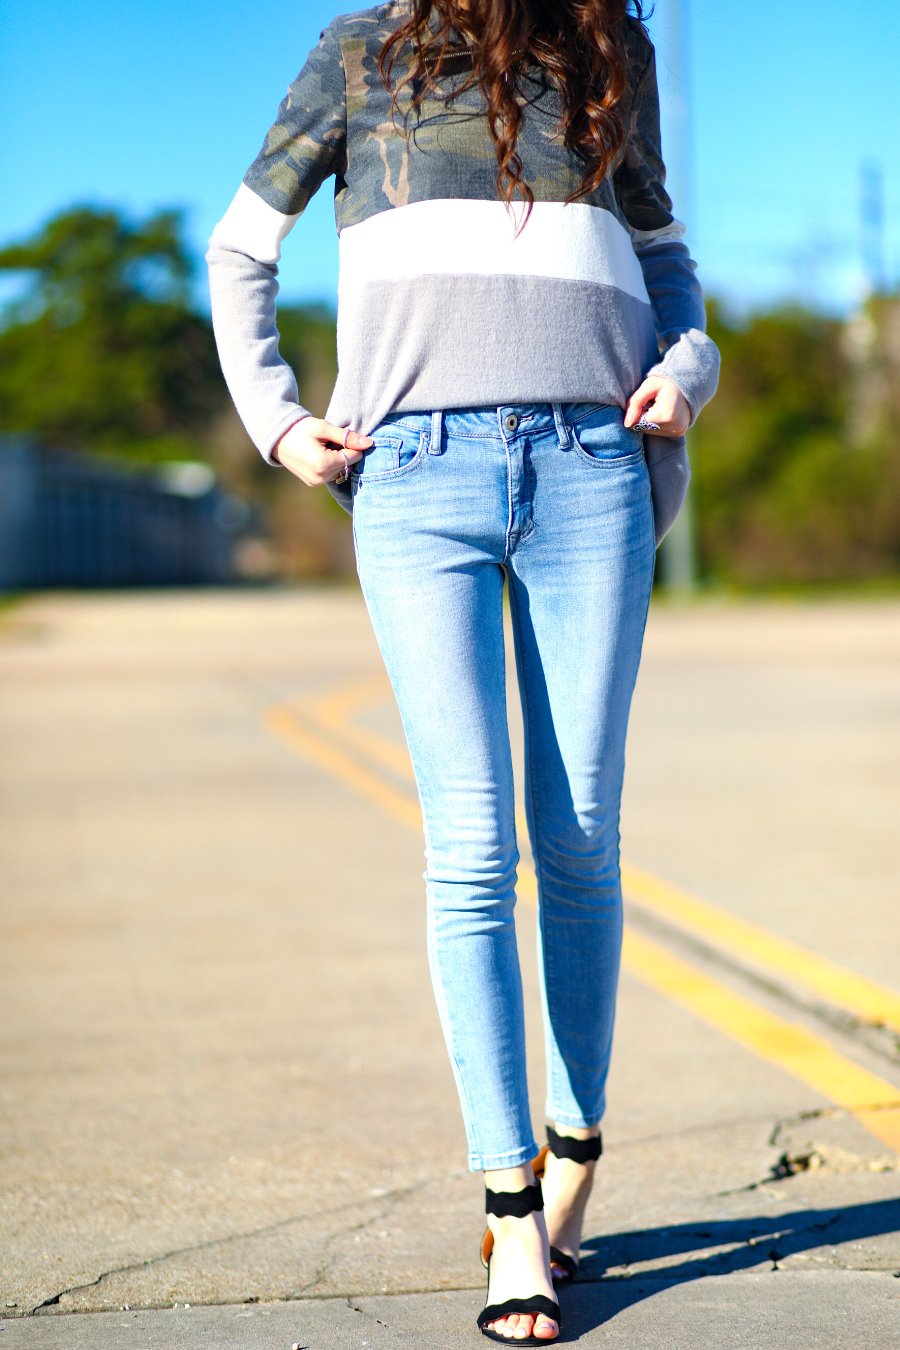 Loose Jeans Retro High Waist Wide Leg Jeans Women's Blue Street Fashion  Straight Pants (Color : Light Blue, Size : X-Large)